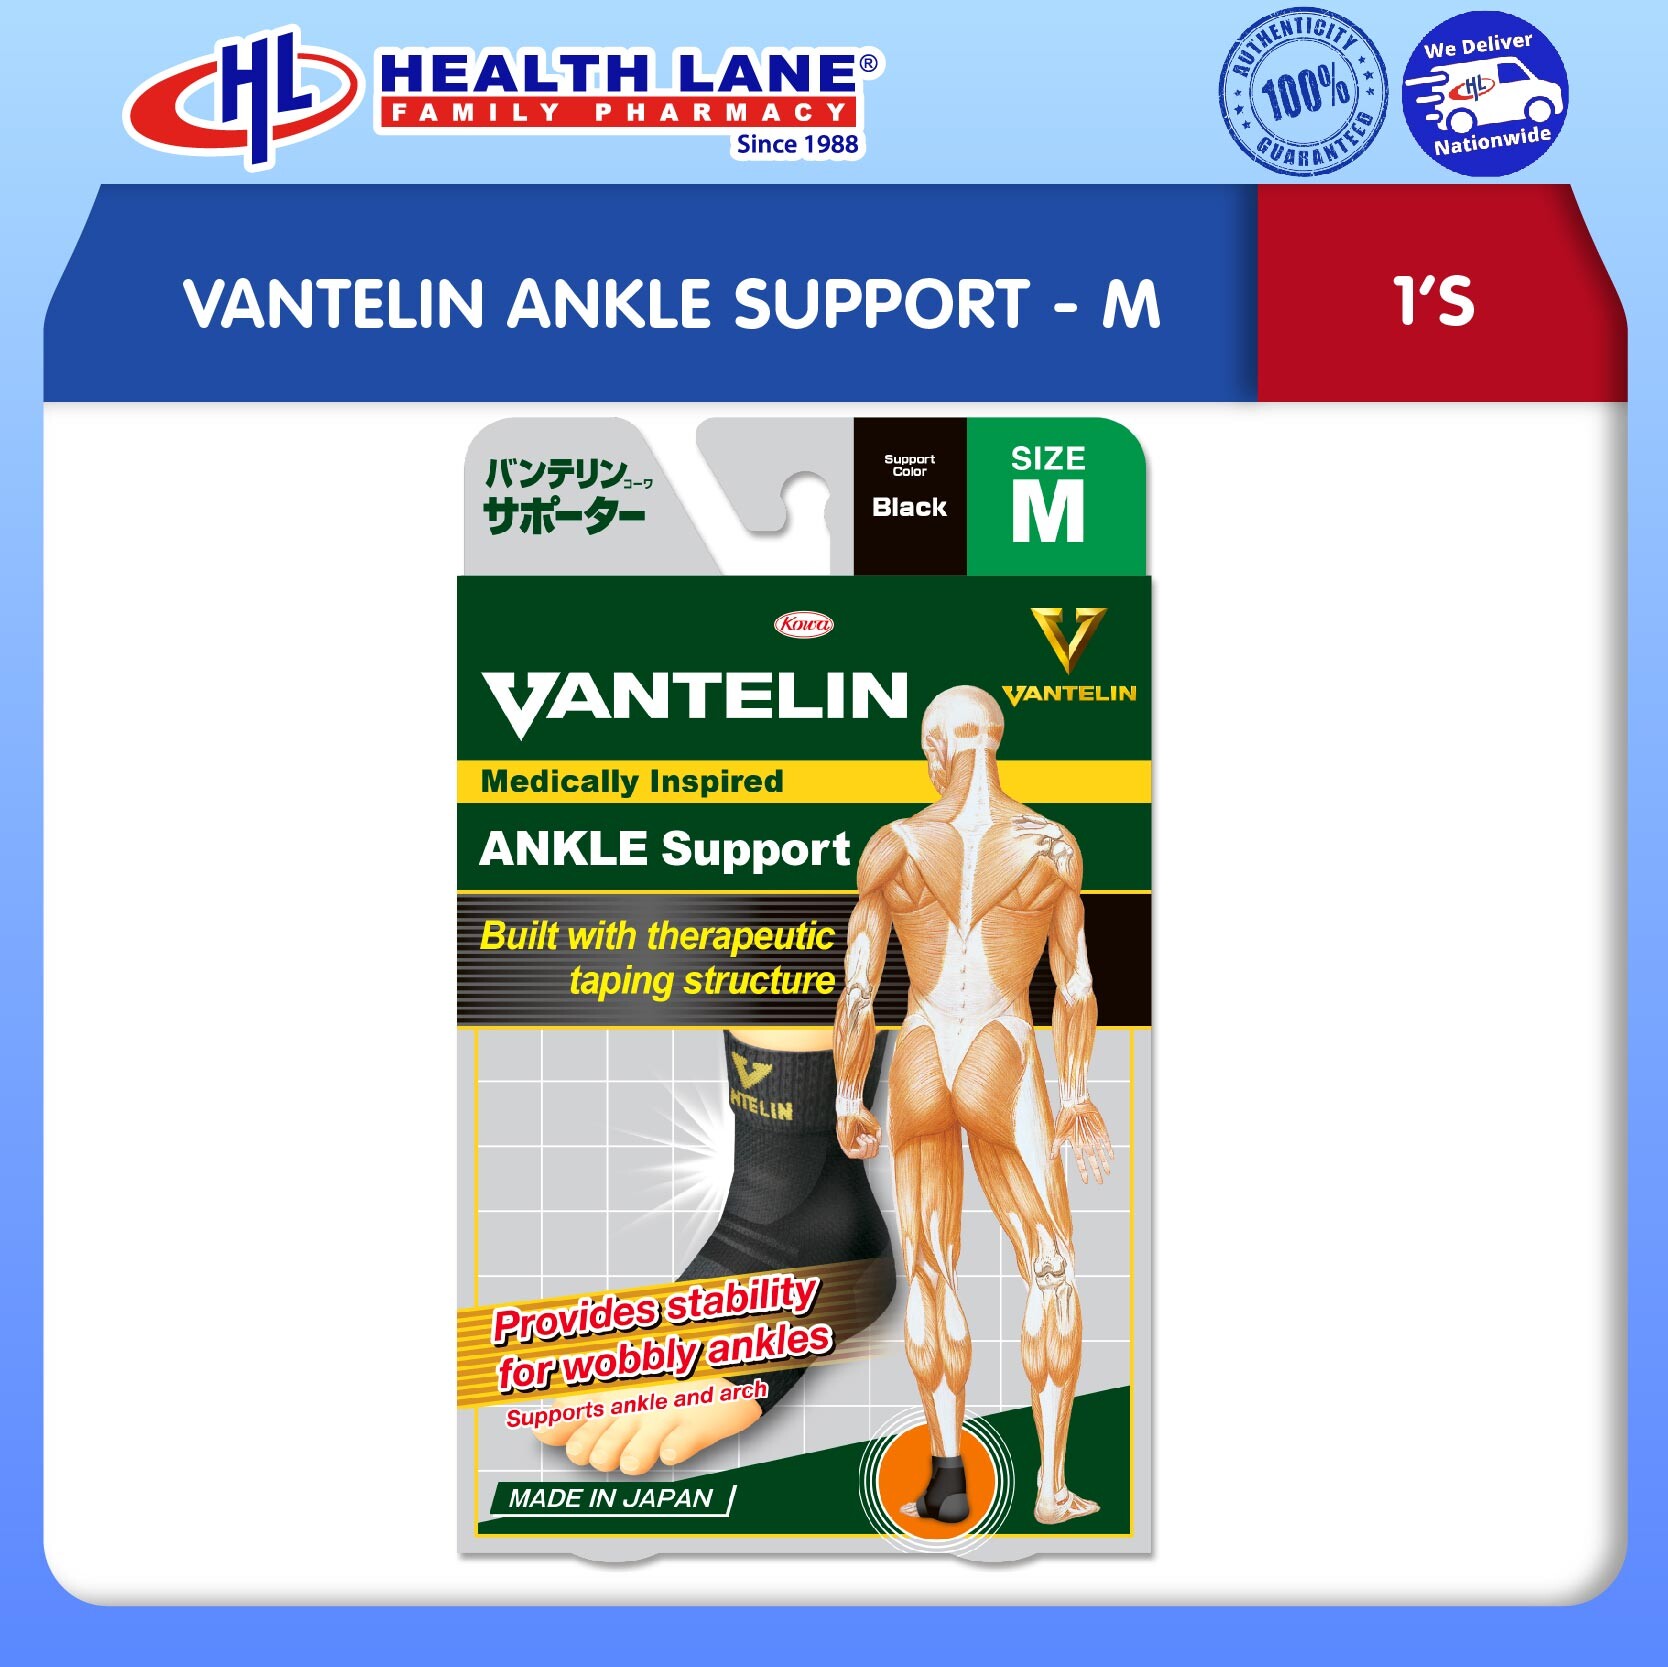 VANTELIN ANKLE SUPPORT - (M)